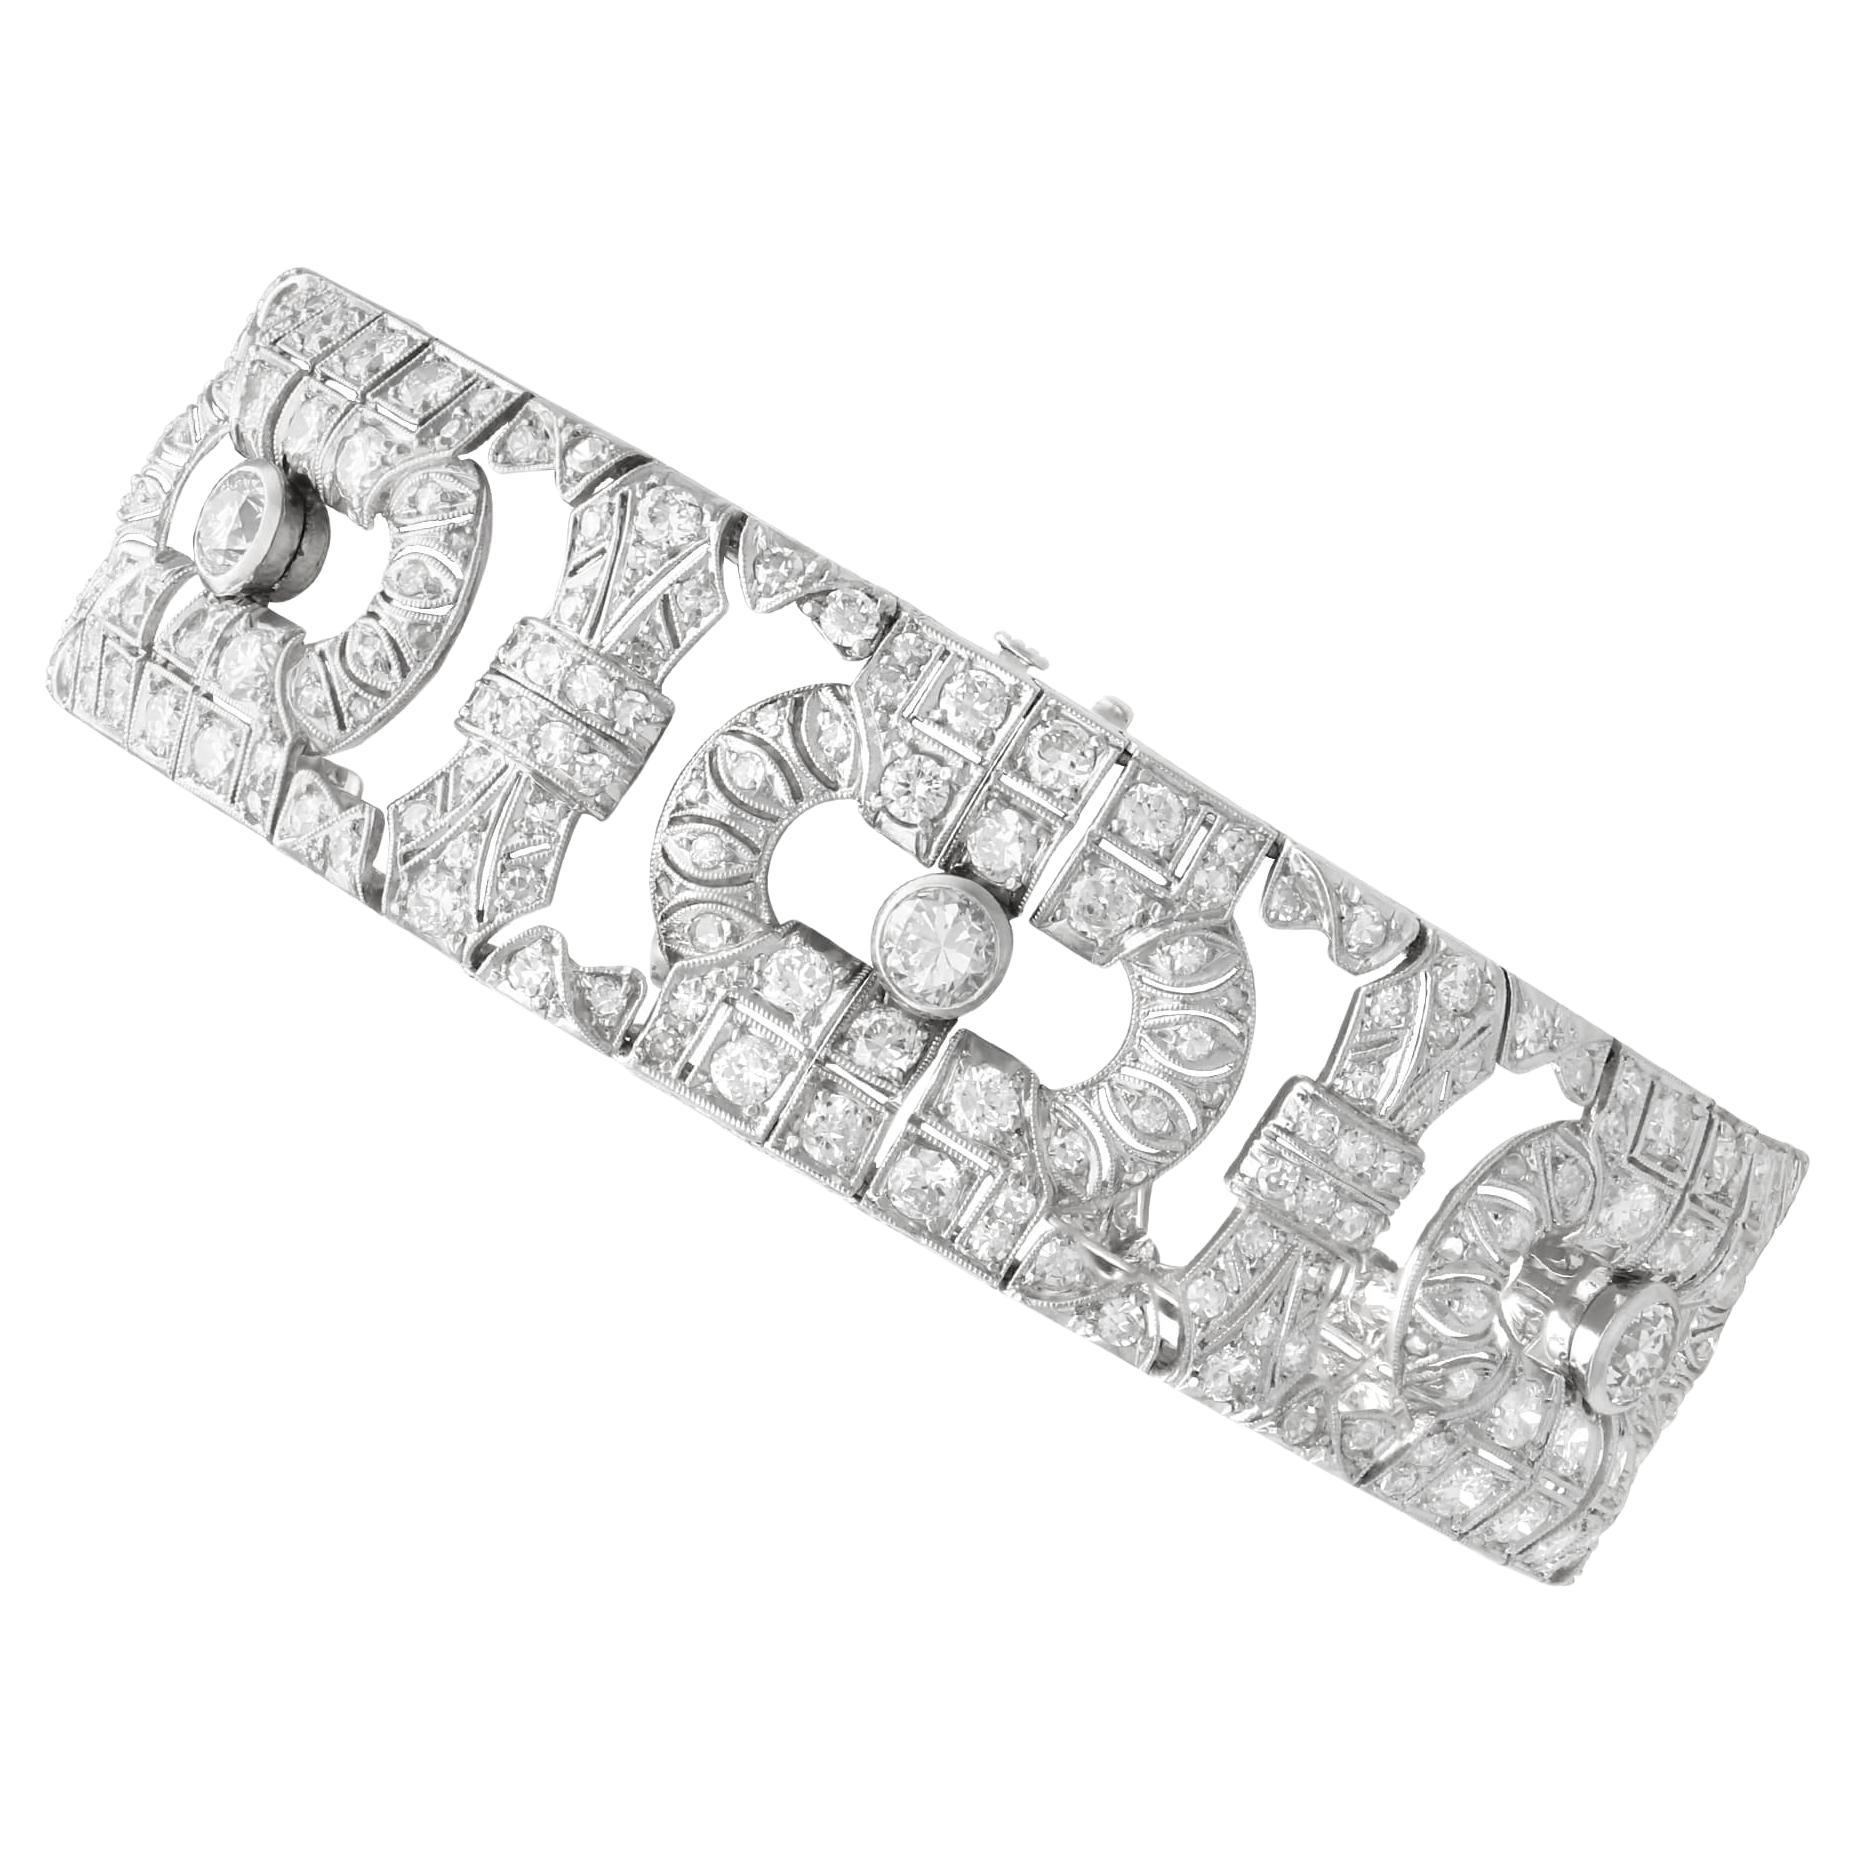 1920s Art Deco 11.32 Carat Diamond and Platinum Bracelet